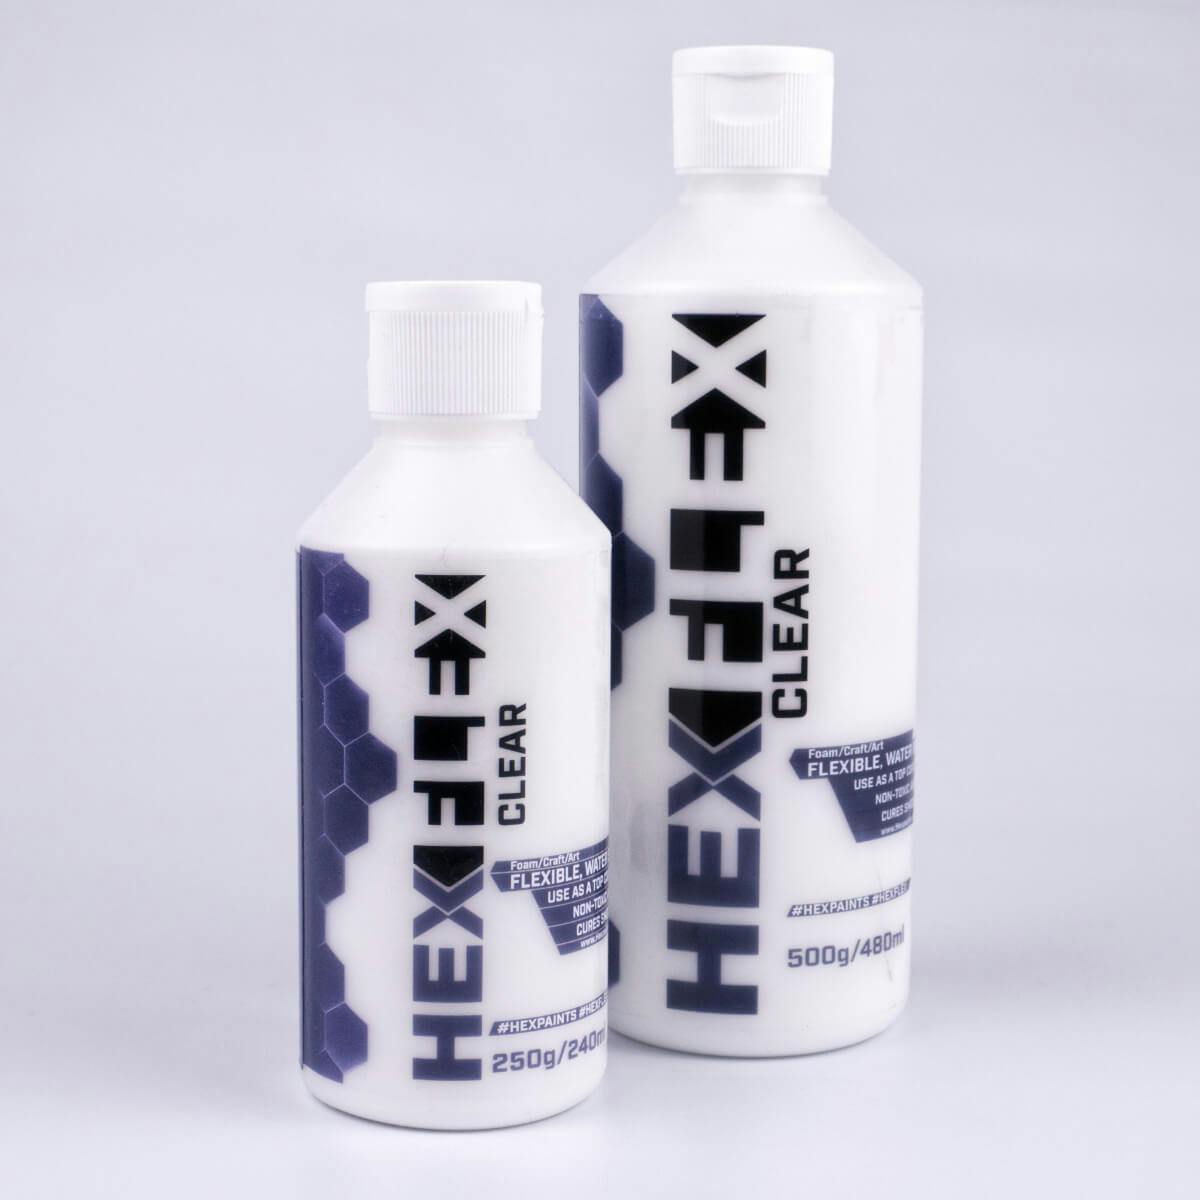 HexFlex Primer in transparent version